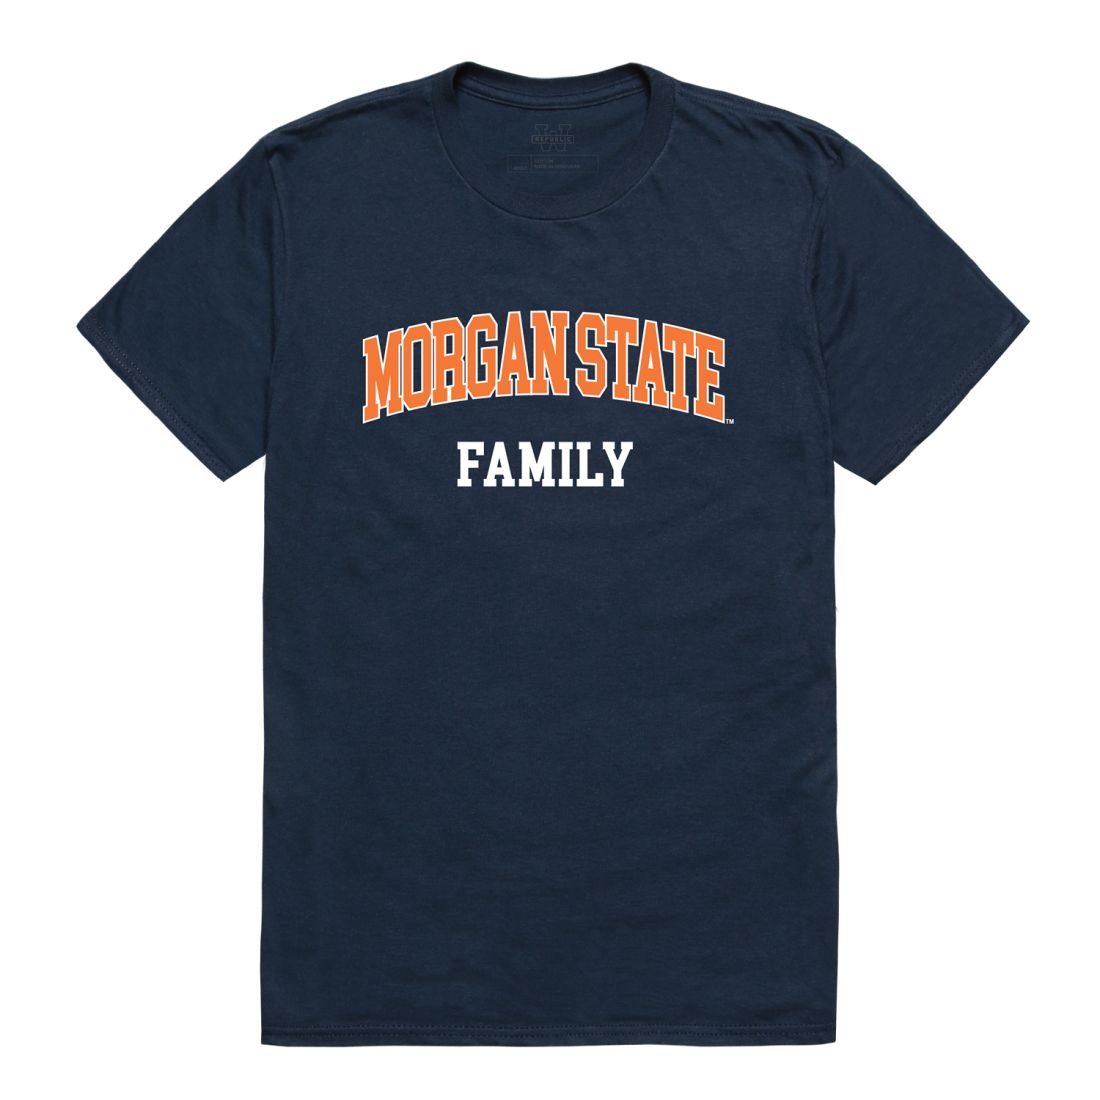 Morgan State University Bears Family T-Shirt